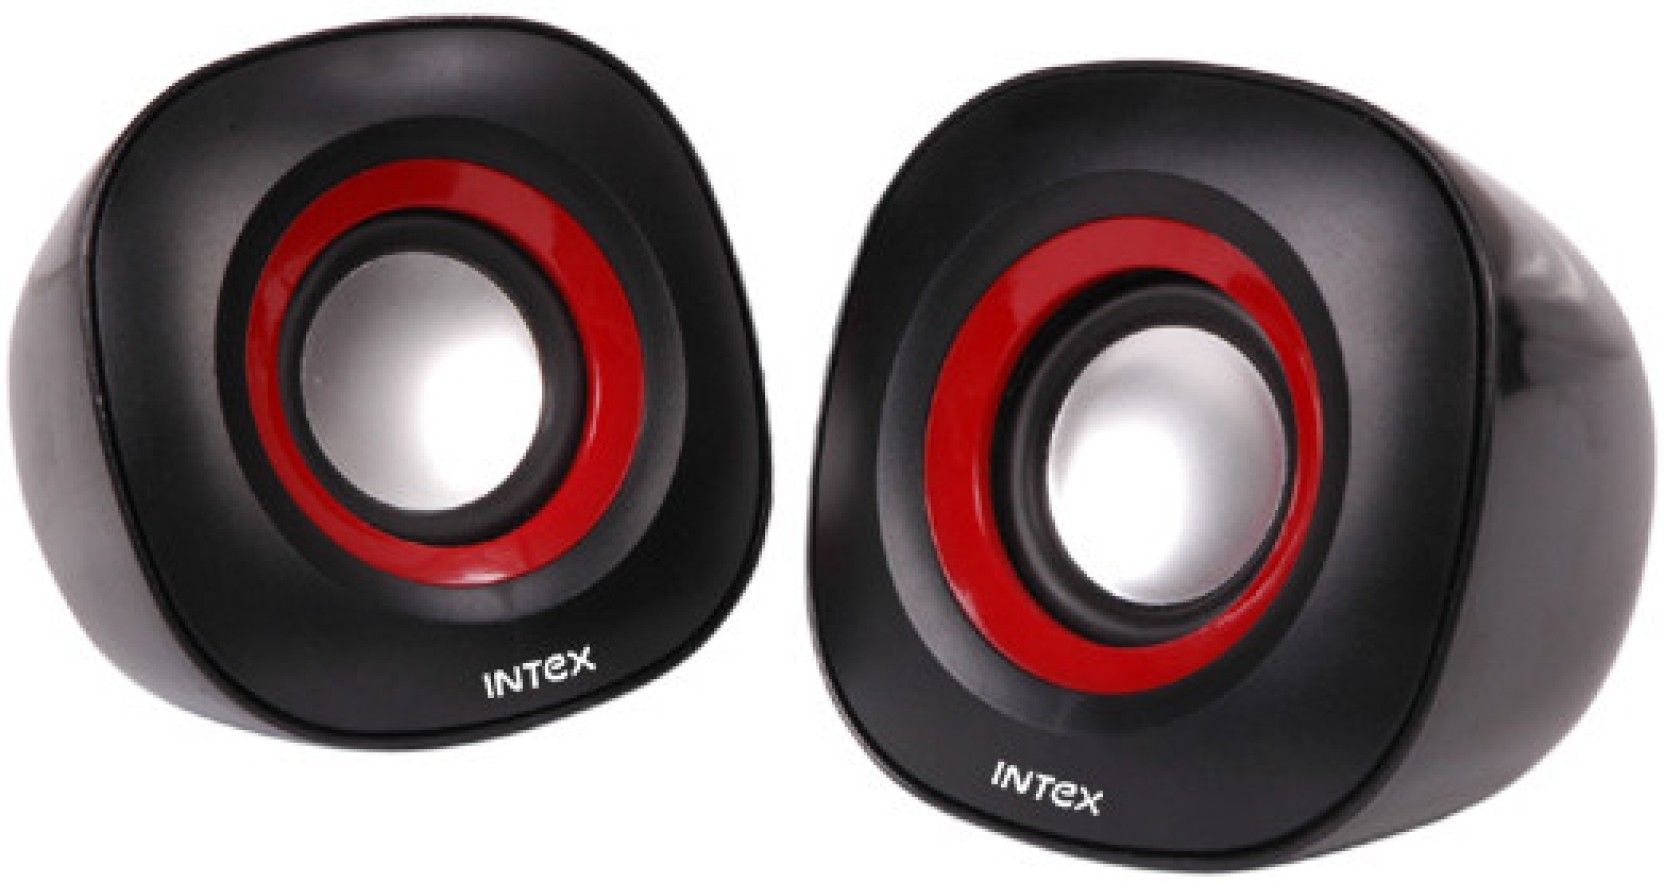 Intex IT-355 2.0 Computer Multimedia Speaker